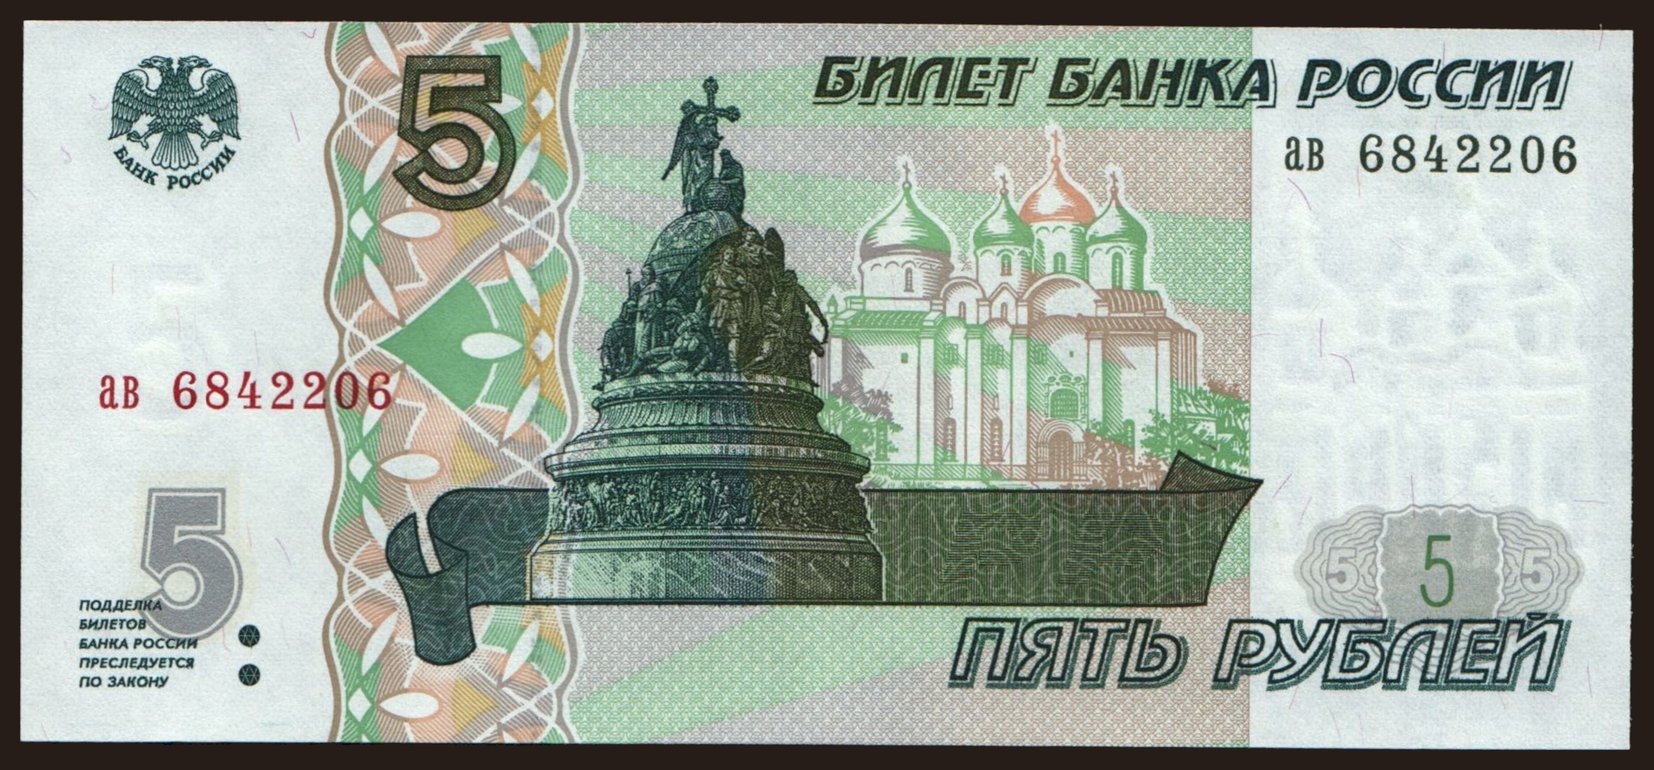 5 rubel, 1997